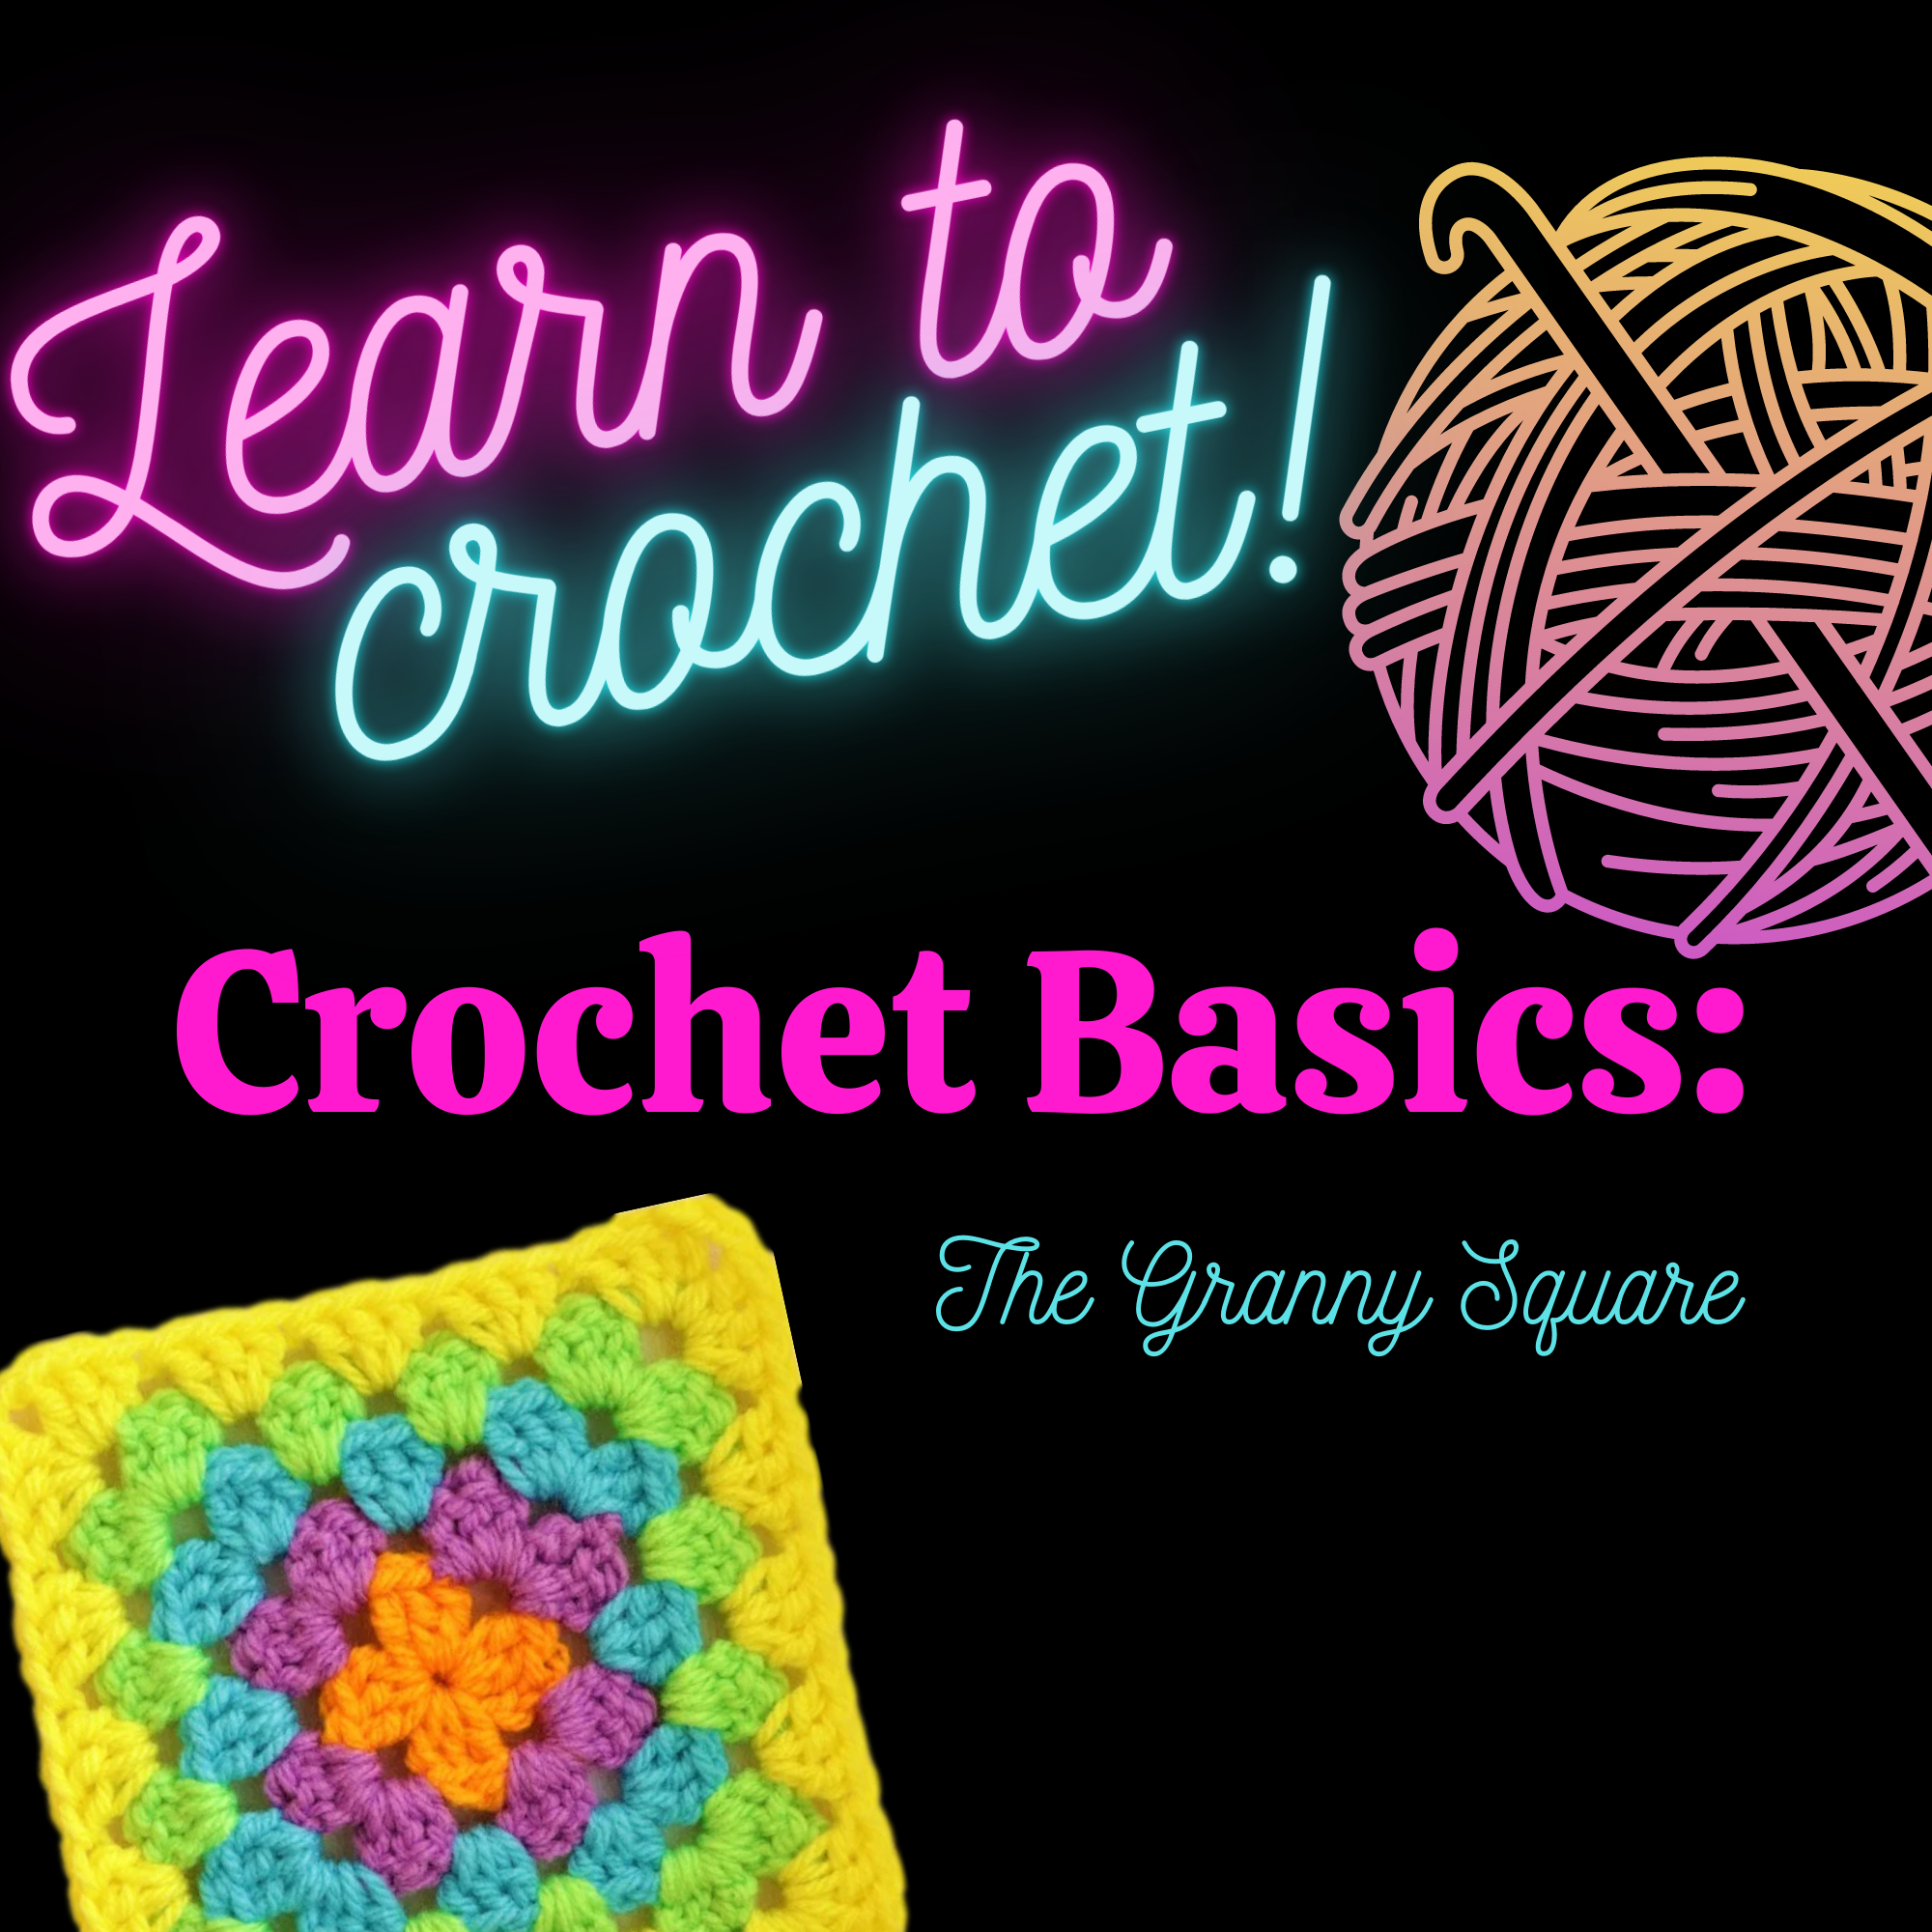 Learn to Crochet! Crochet Basics: The Granny Square